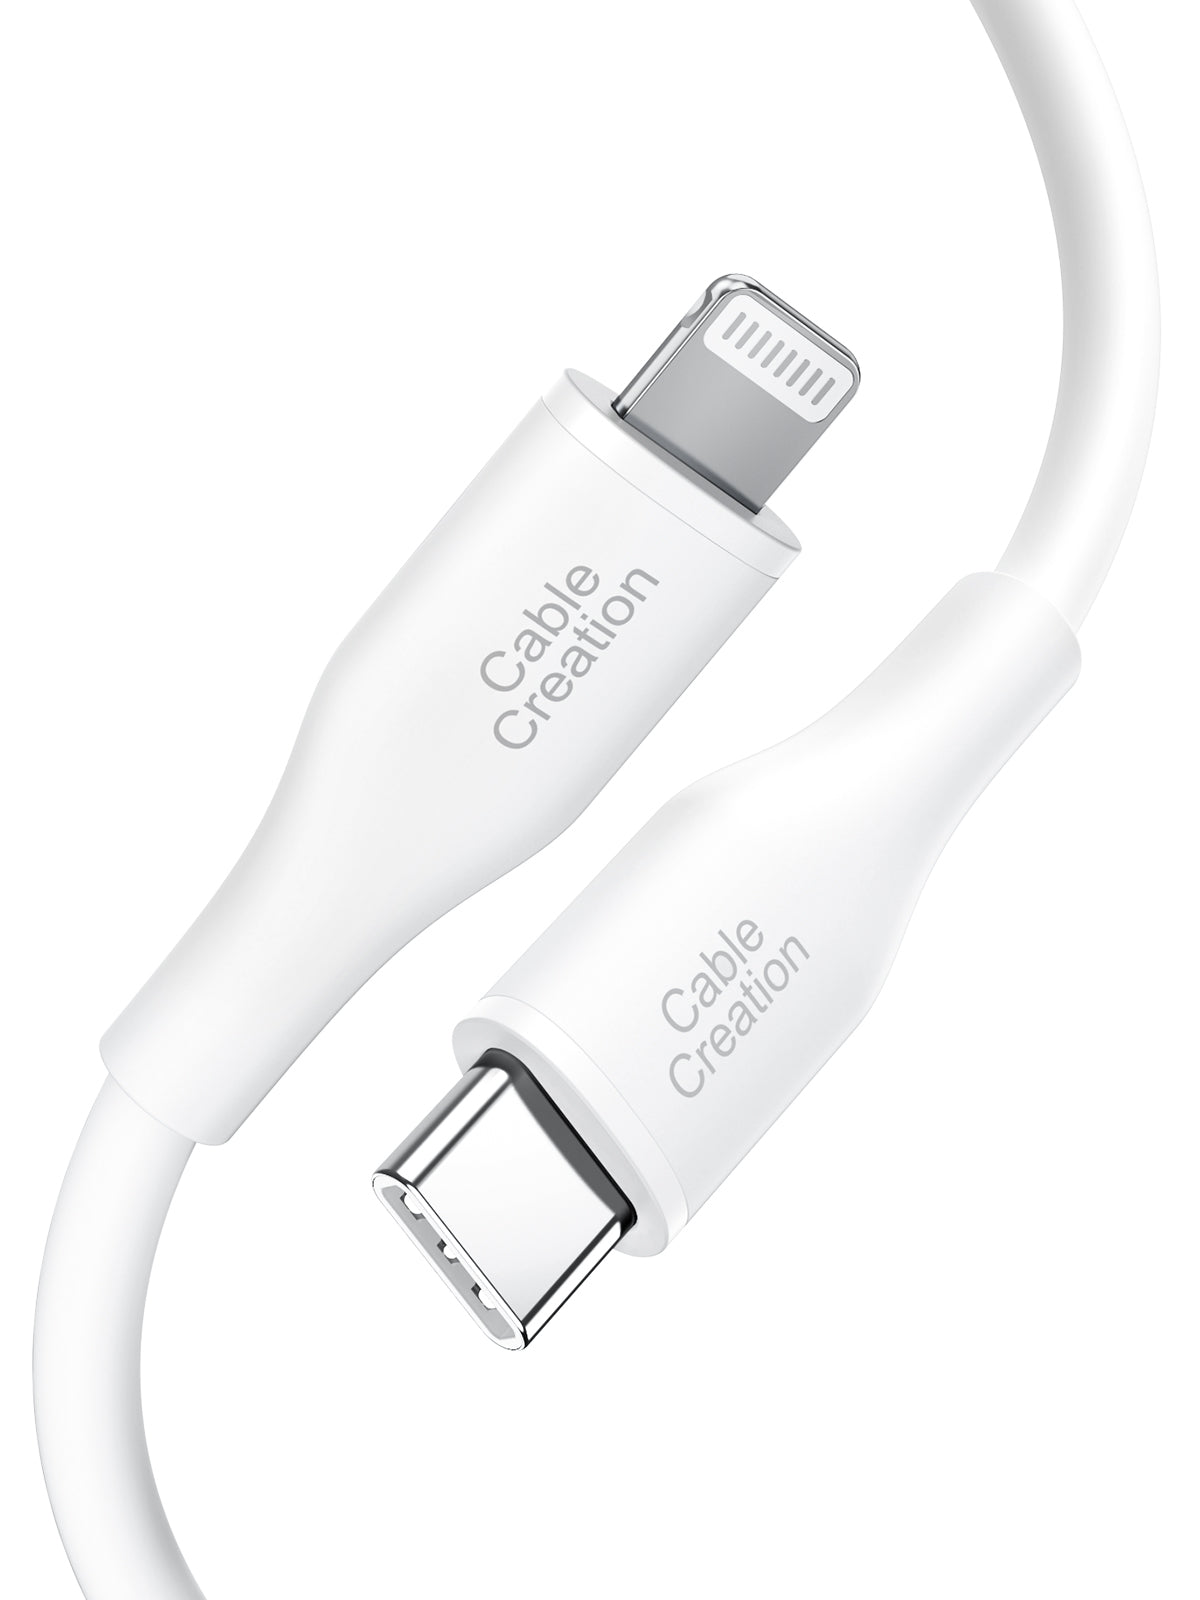 Type C iPhone Charging Cord